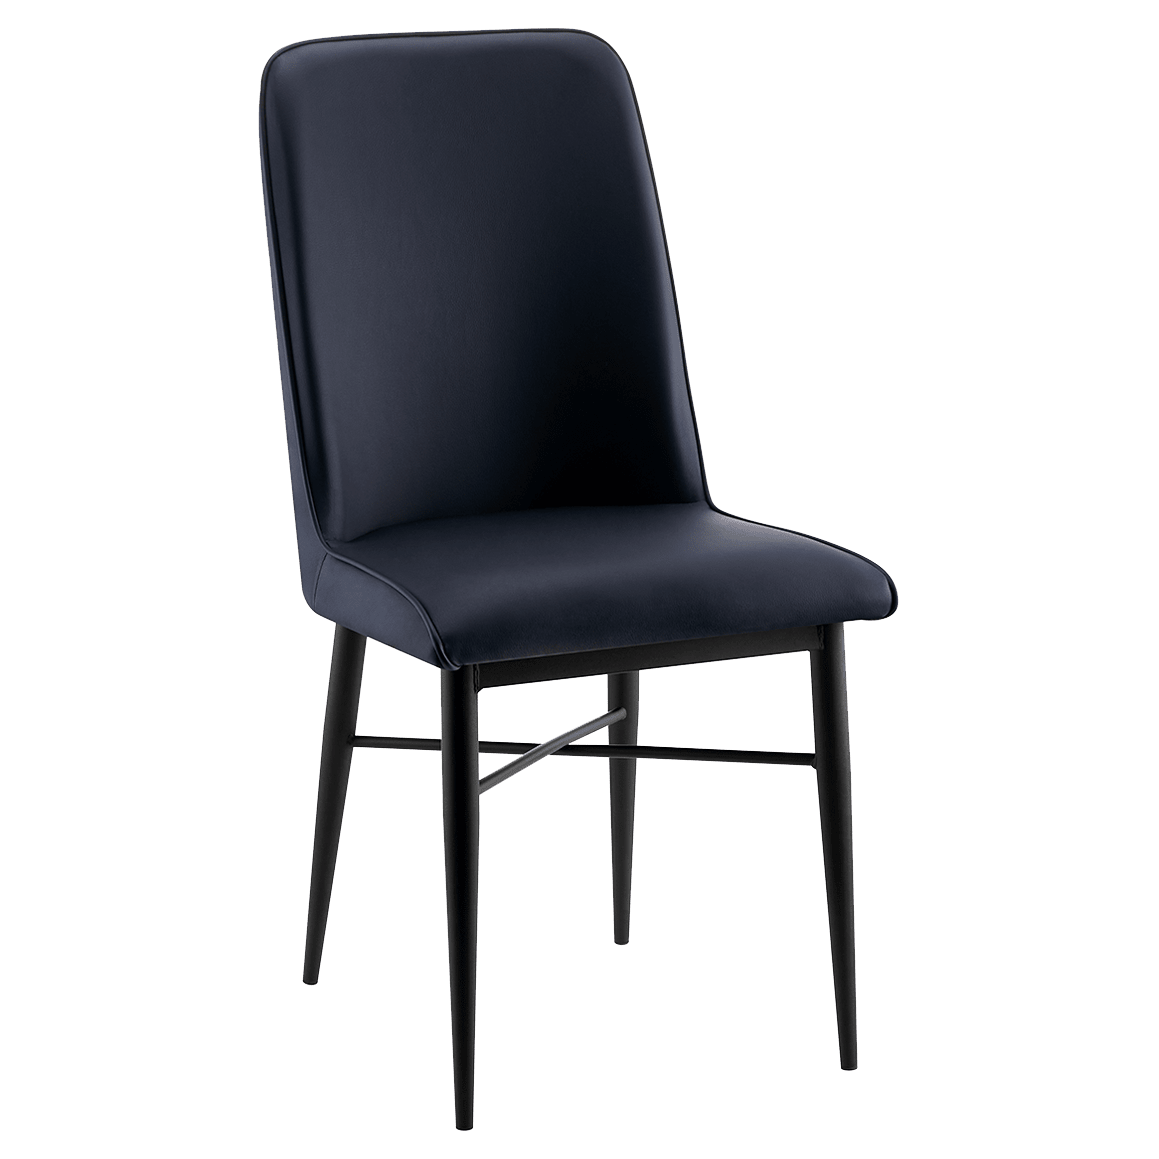 Harbour Metal Restaurant Chair